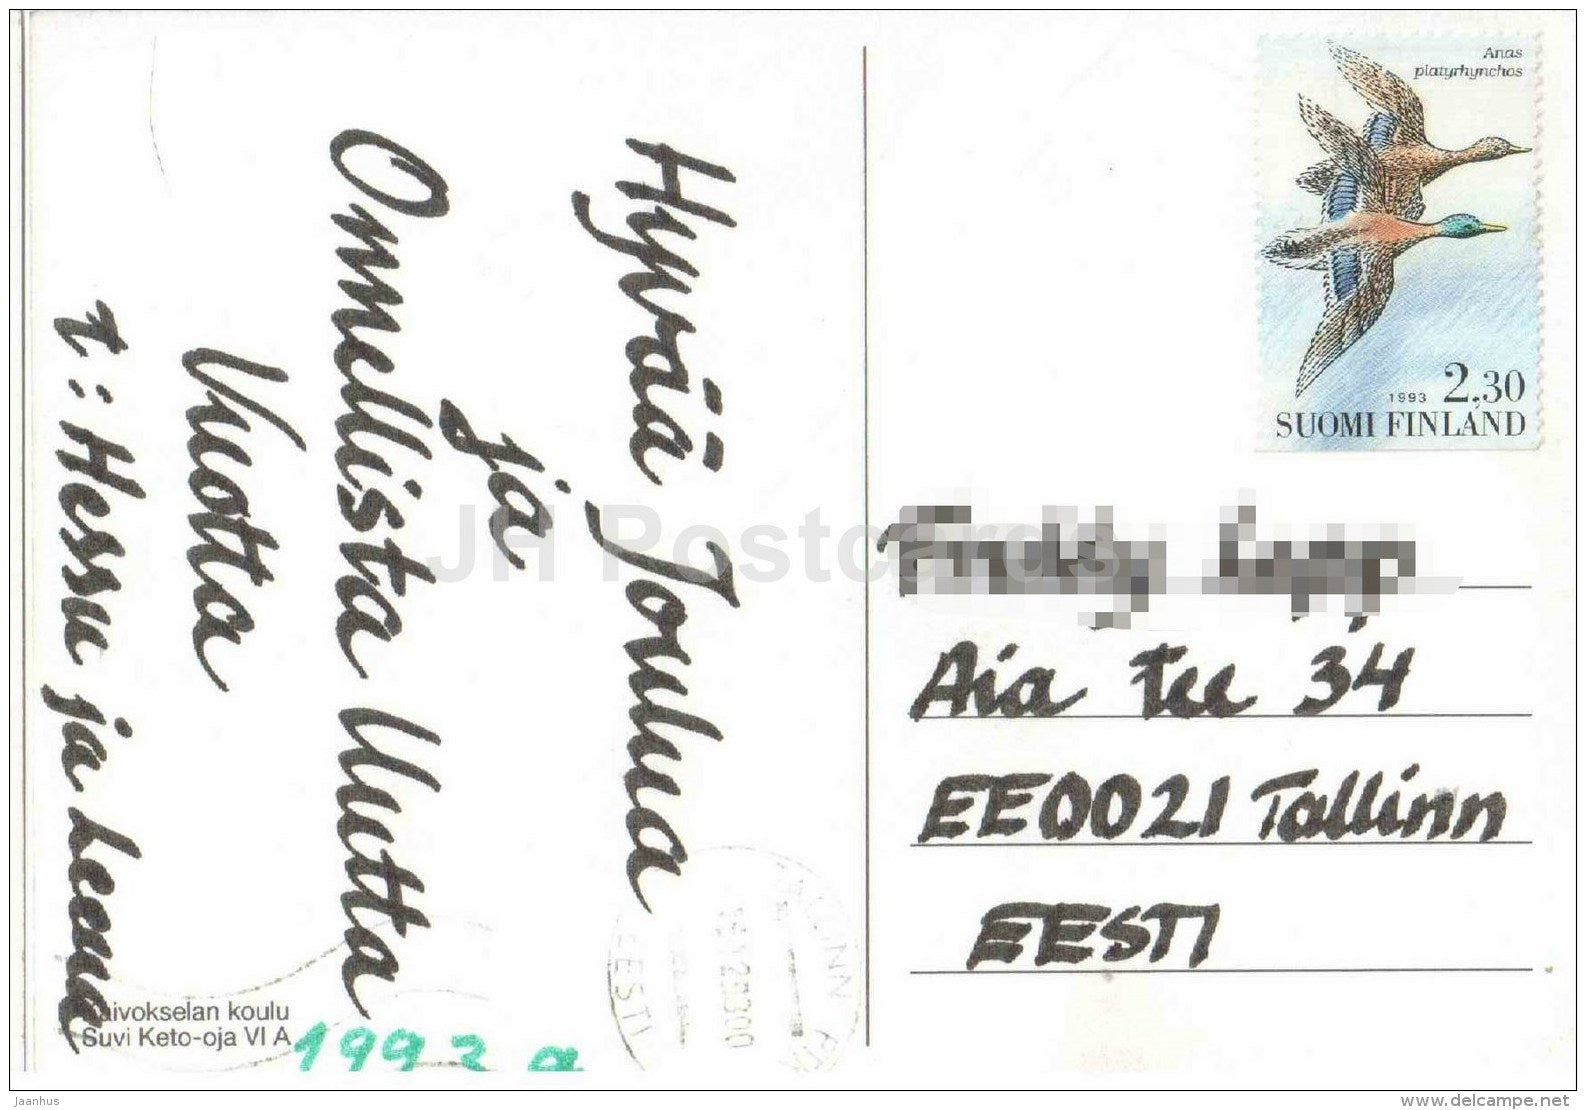 Christmas greeting card - church illustration - Mallard stamp - Finland - circulated in 1993 - JH Postcards